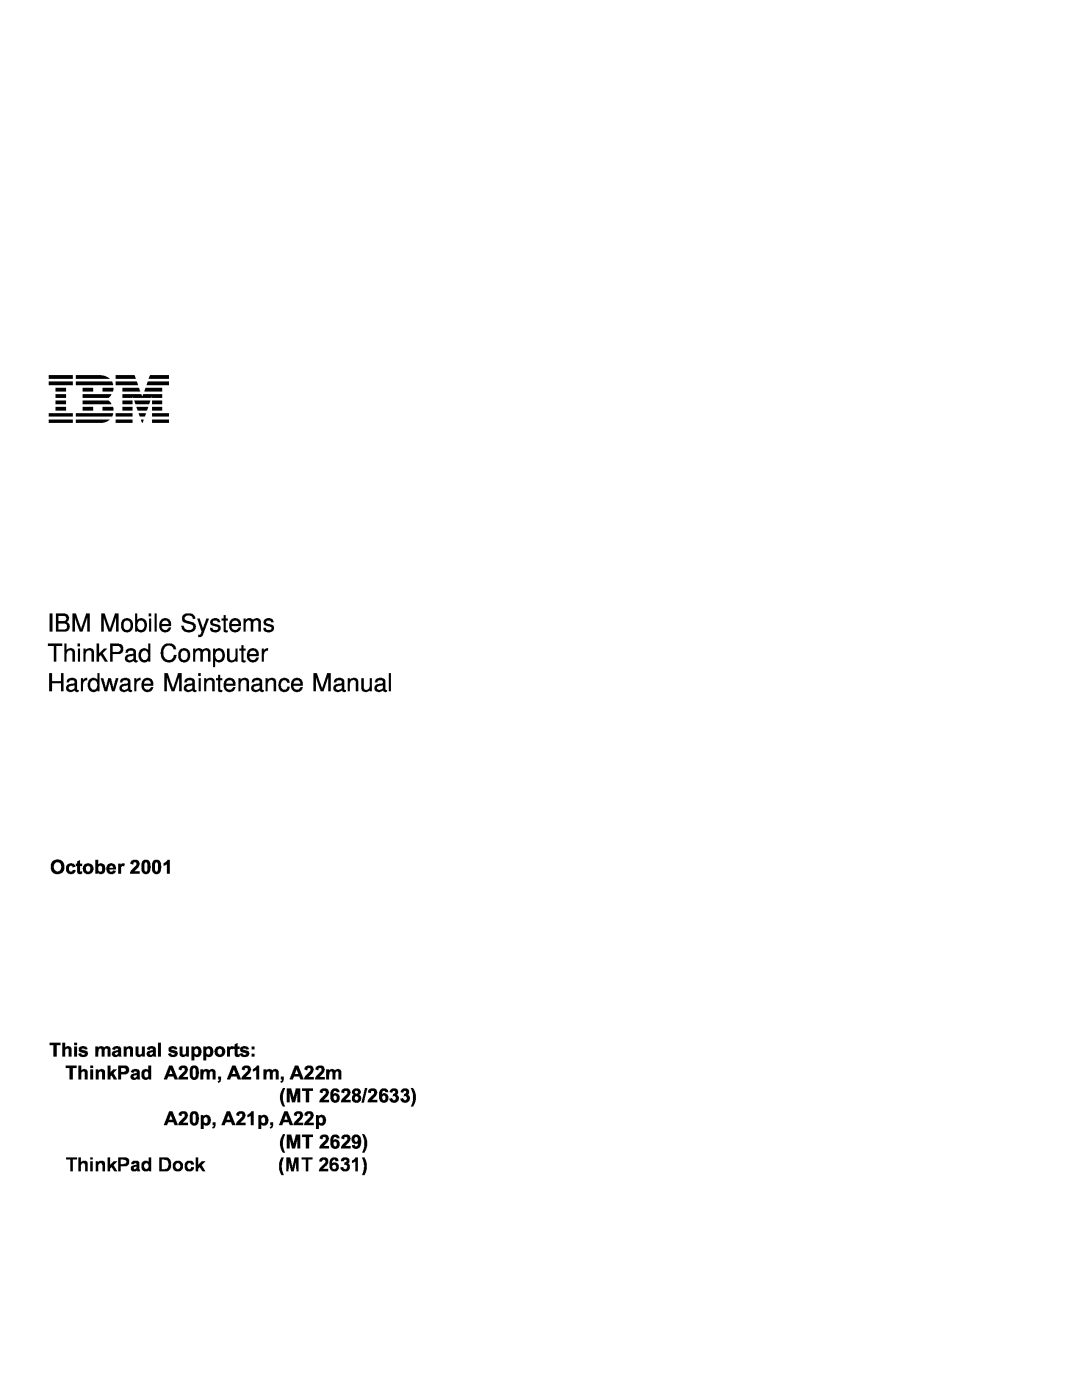 IBM A22P, A21M manual IBM Mobile Systems ThinkPad Computer Hardware Maintenance Manual, A20p, A21p, A22p, ThinkPad Dock 